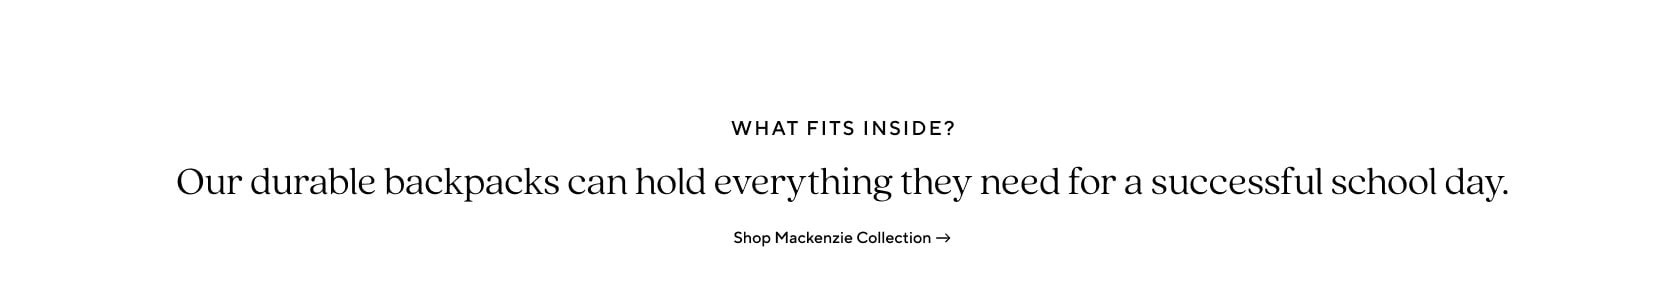 Shop Mackenzie Collection